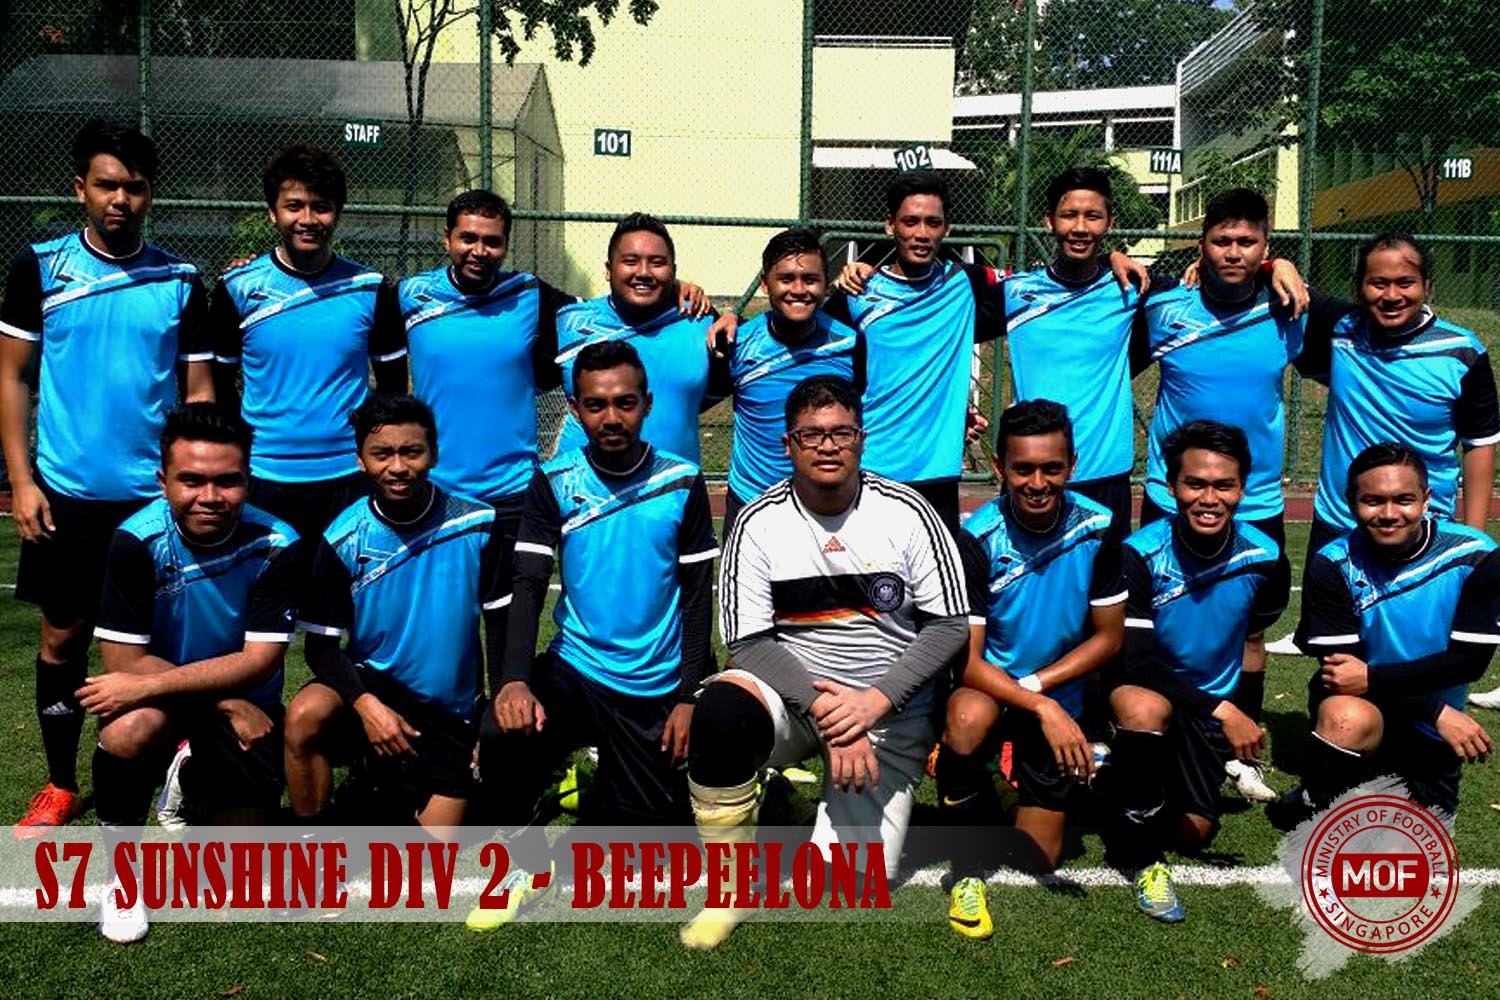 Beepeelona FC